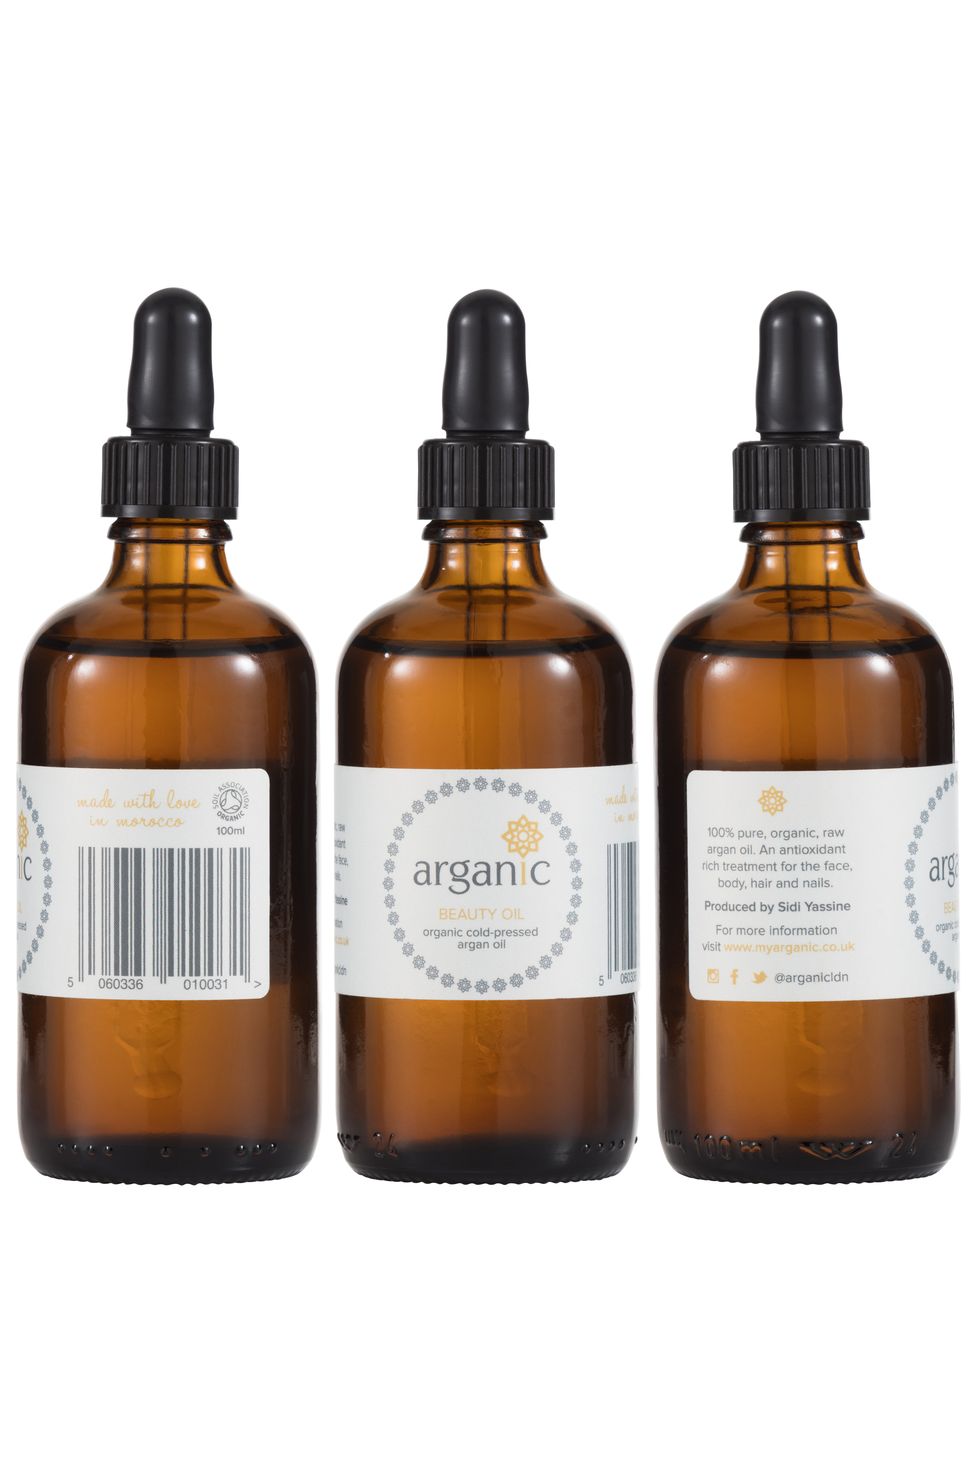 Arganic Organic Cosmetic Argan Oil